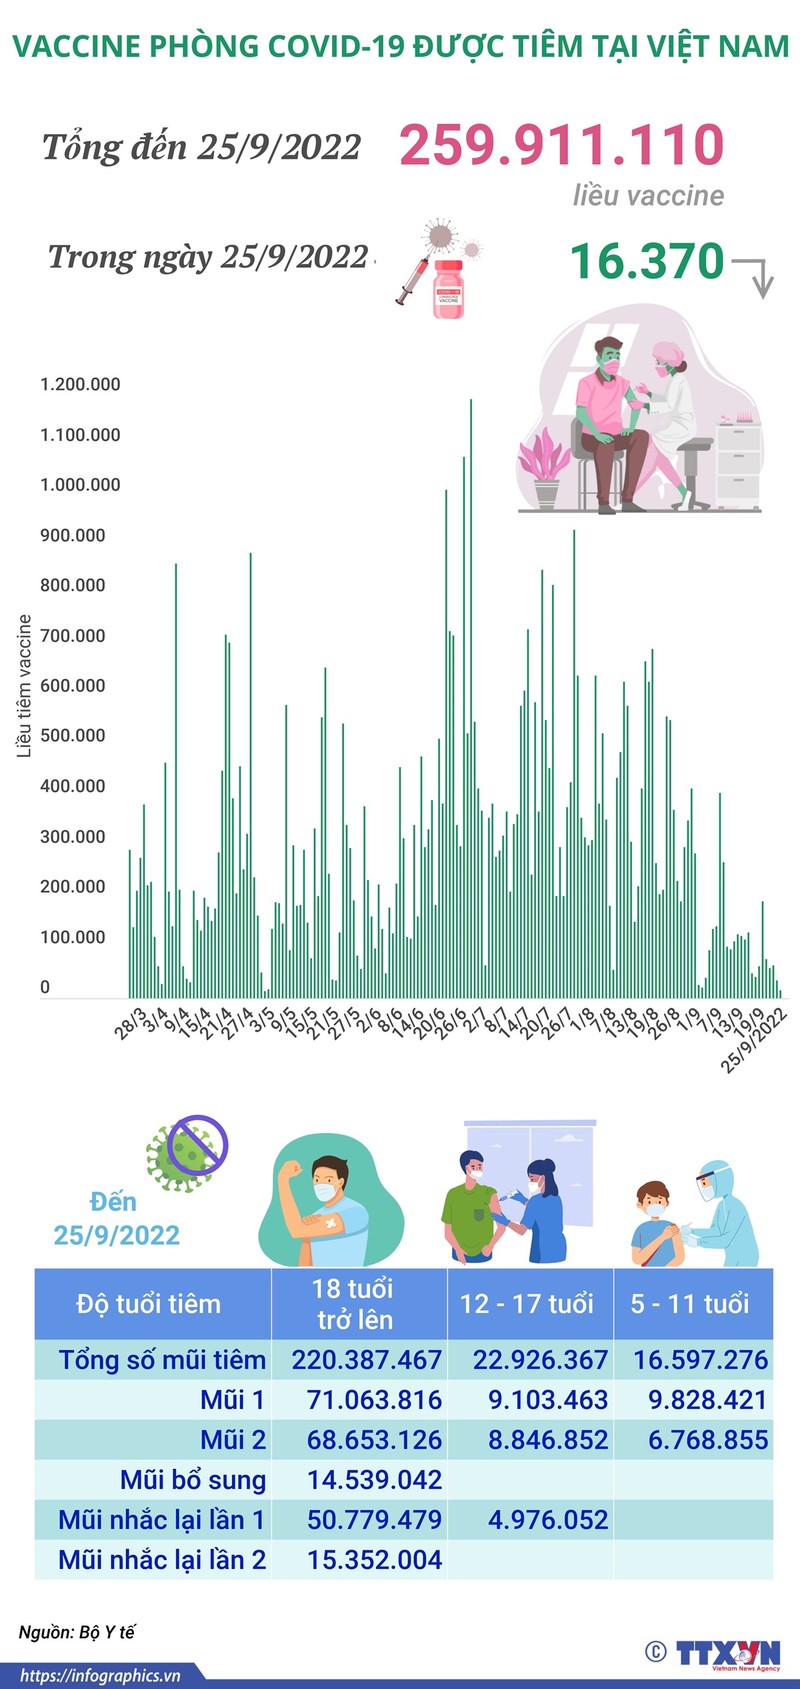 Hon 259,91 trieu lieu vaccine phong COVID-19 da duoc tiem tai Viet Nam